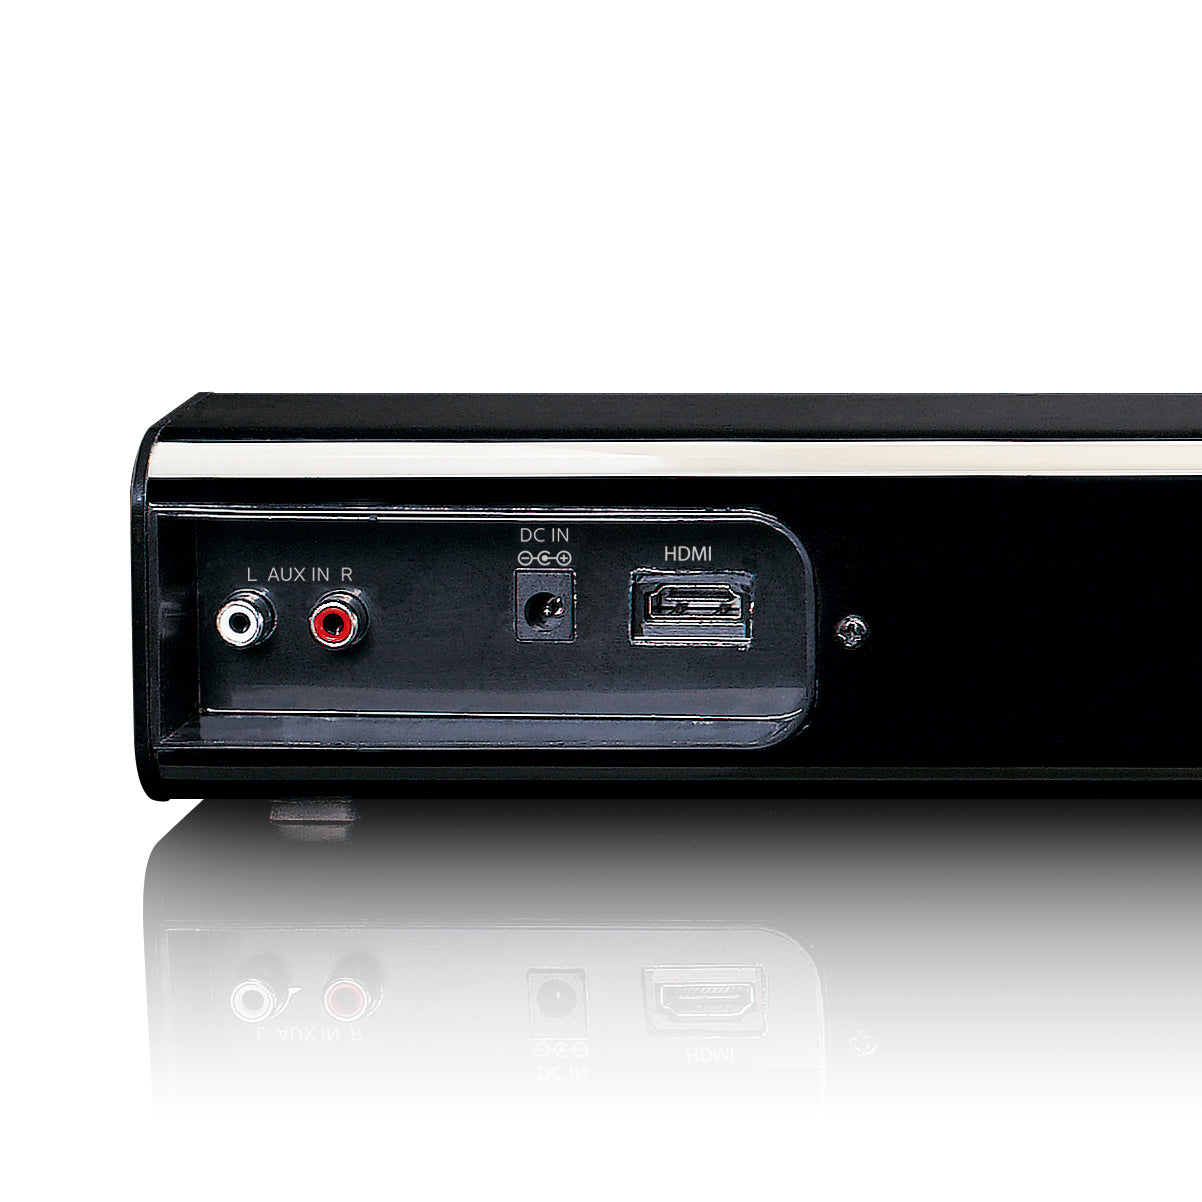 LENCO SB-040 - 85cm Soundbar met 40W RMS, Bluetooth® en HDMI - Zwart